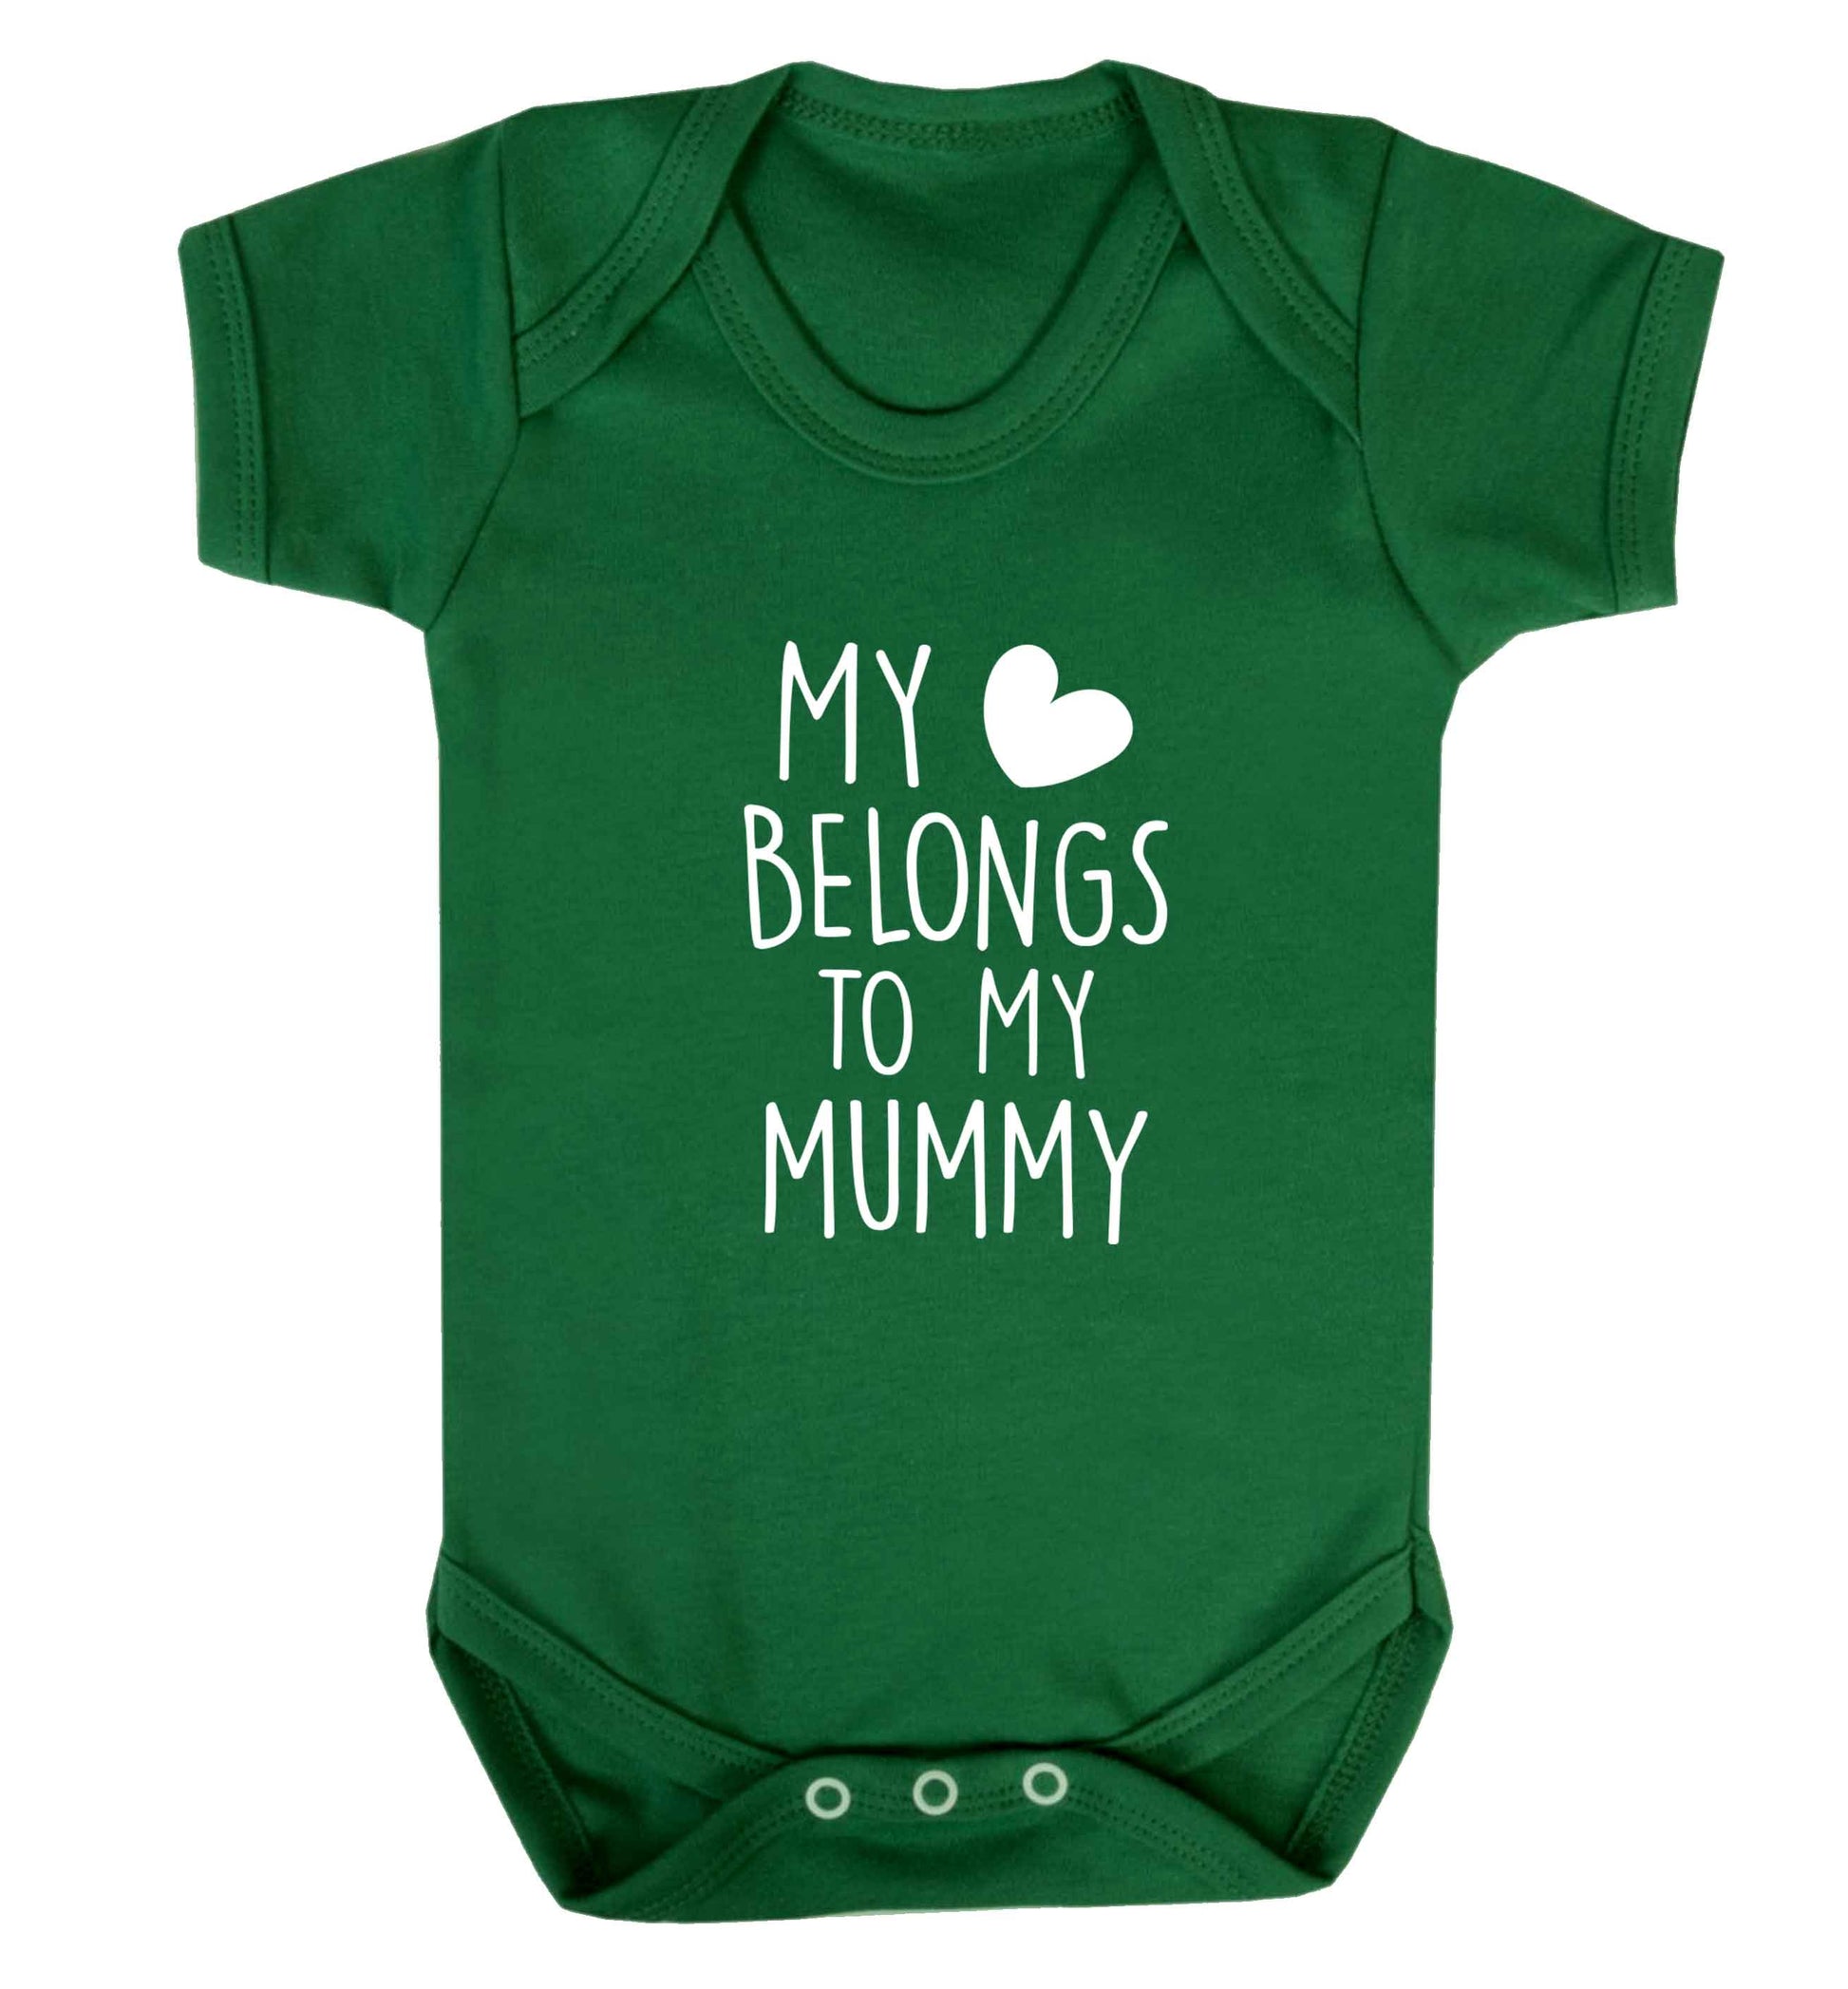 My heart belongs to my mummy baby vest green 18-24 months